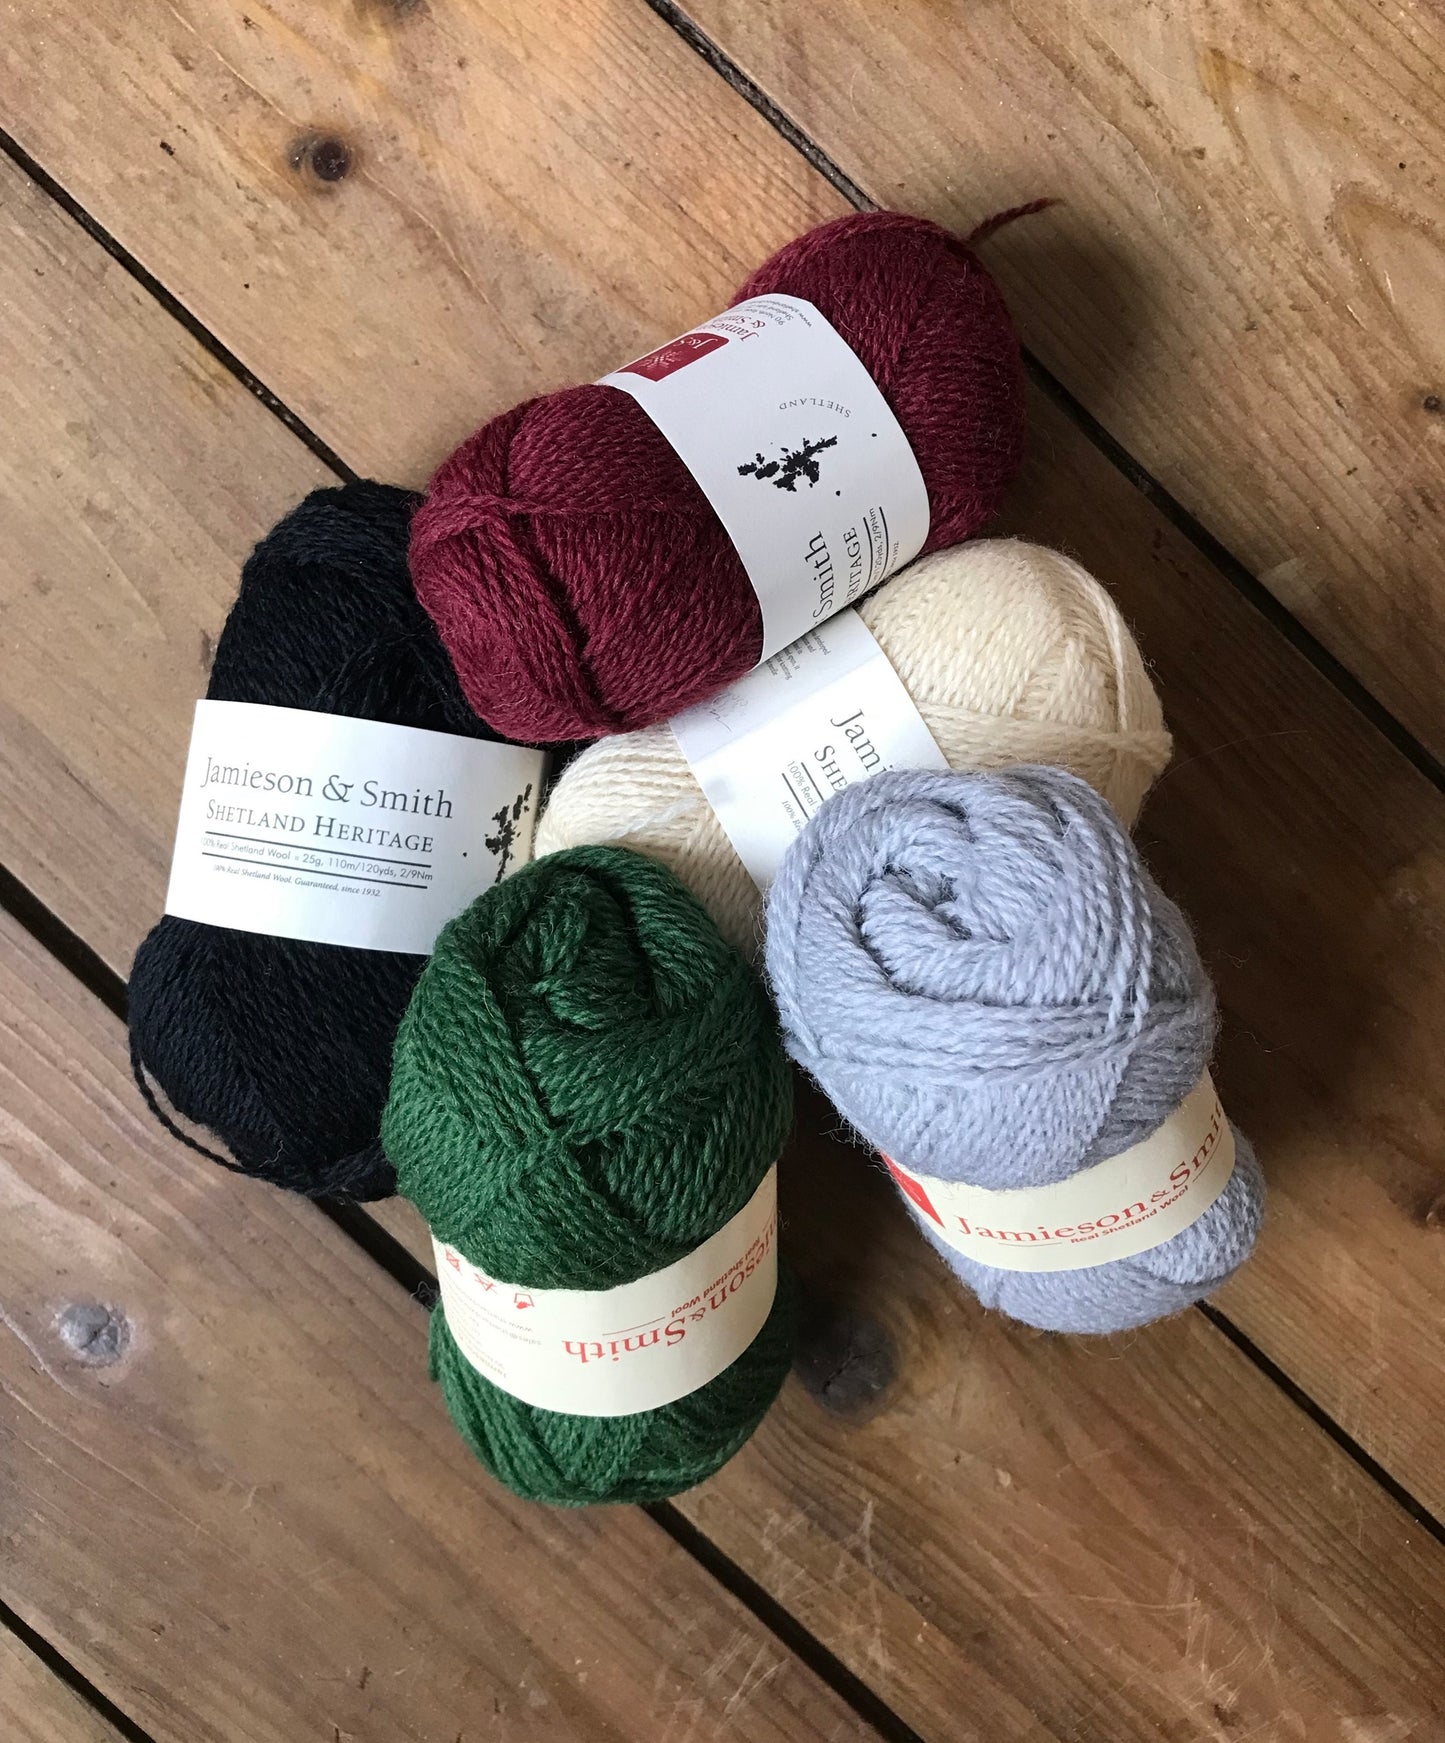 Knitting Jenny Pattern 30: Fair Isle Inspired Fisherman’s Kep and Design Workbook